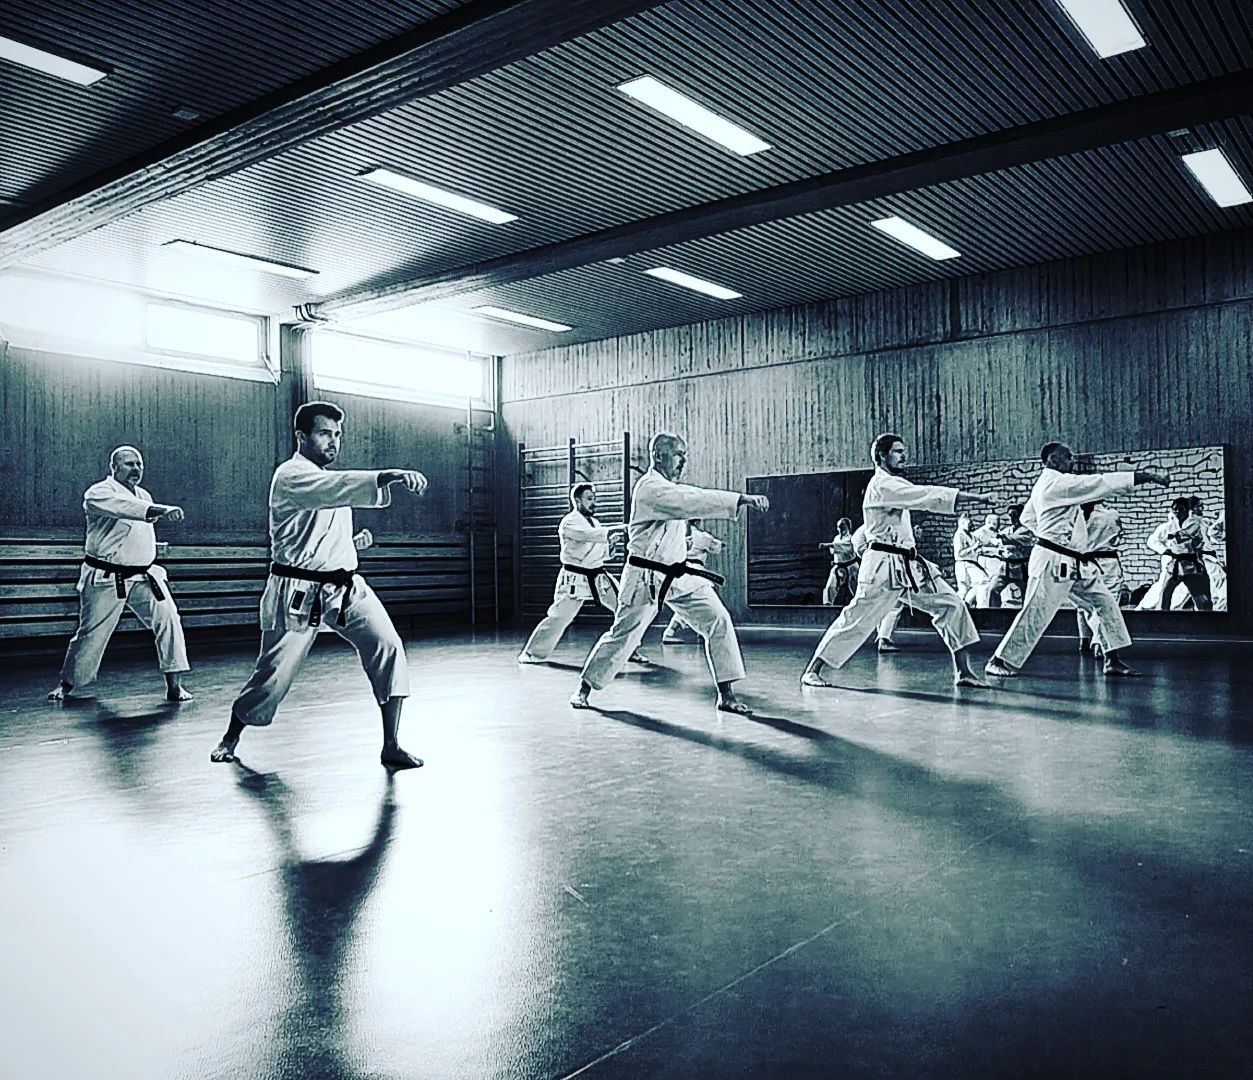 Training im Dojo Yamato Düsseldorf e.V.🥋
Trainer René Winkler
.
.
.
.
.
.
#karate #training #fun #jka #djkb #kihon #kata #kumite #düsseldorf #duesseldorf #japan #sport #sportmotivation #shotokan #traditional #nrw #yamatoduesseldorf #fitness #fitnessmotivation #jkaKarate #jkakaratedo #neuss #ratingen #hilden #leverkusen #kaarst #selbstbstbewusstsein #selbstvertrauen